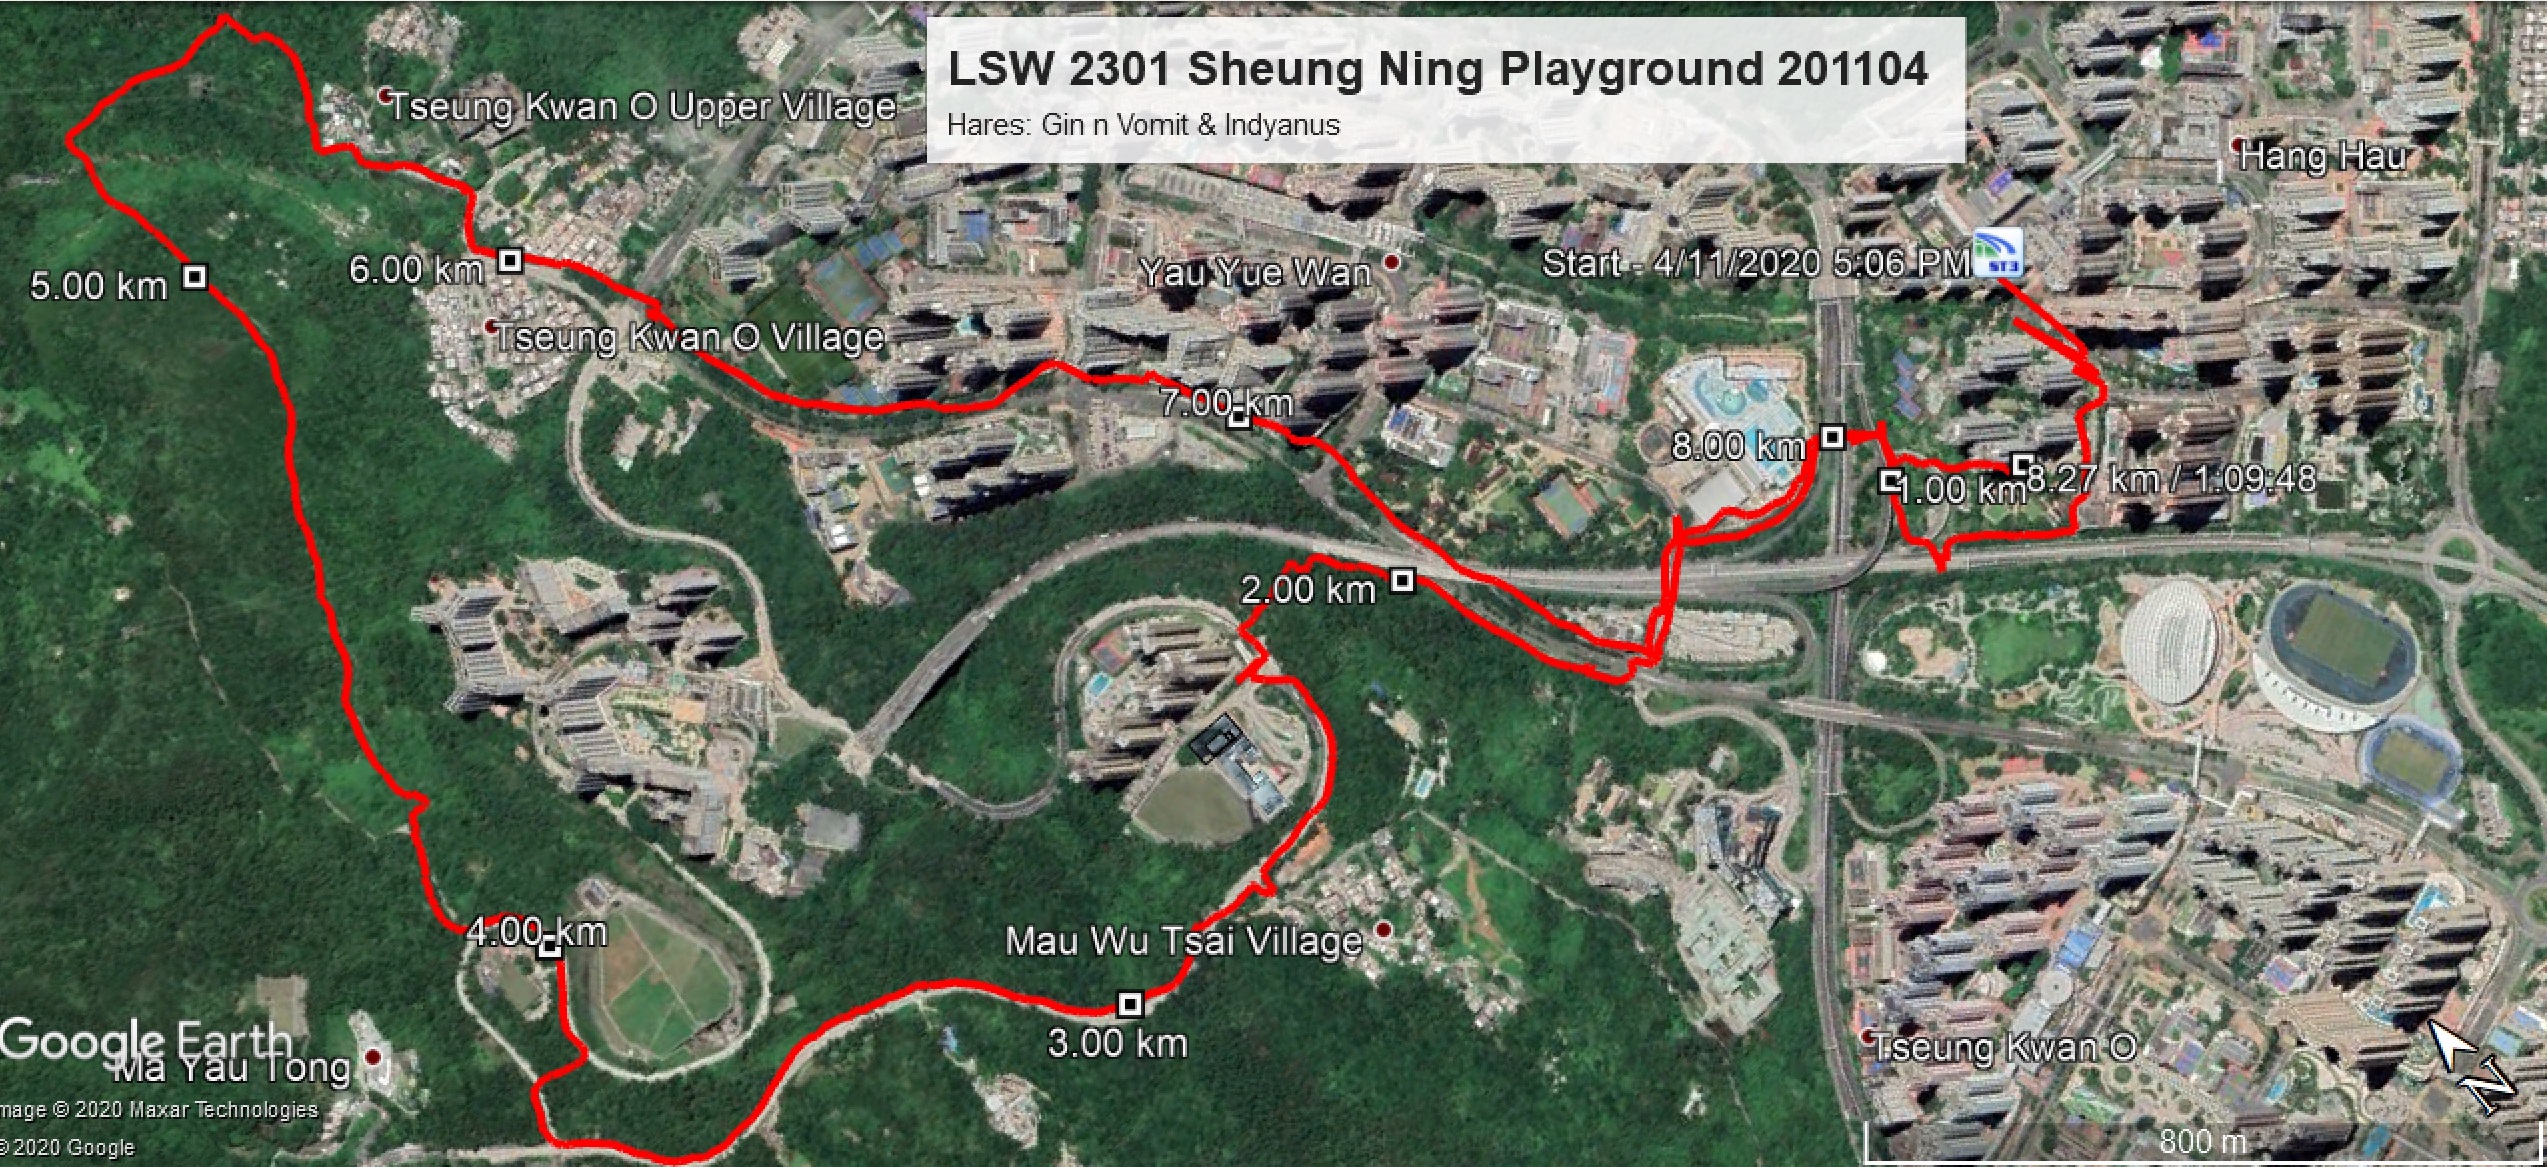 Sheung Ning Playground 201104 8.27 69mins